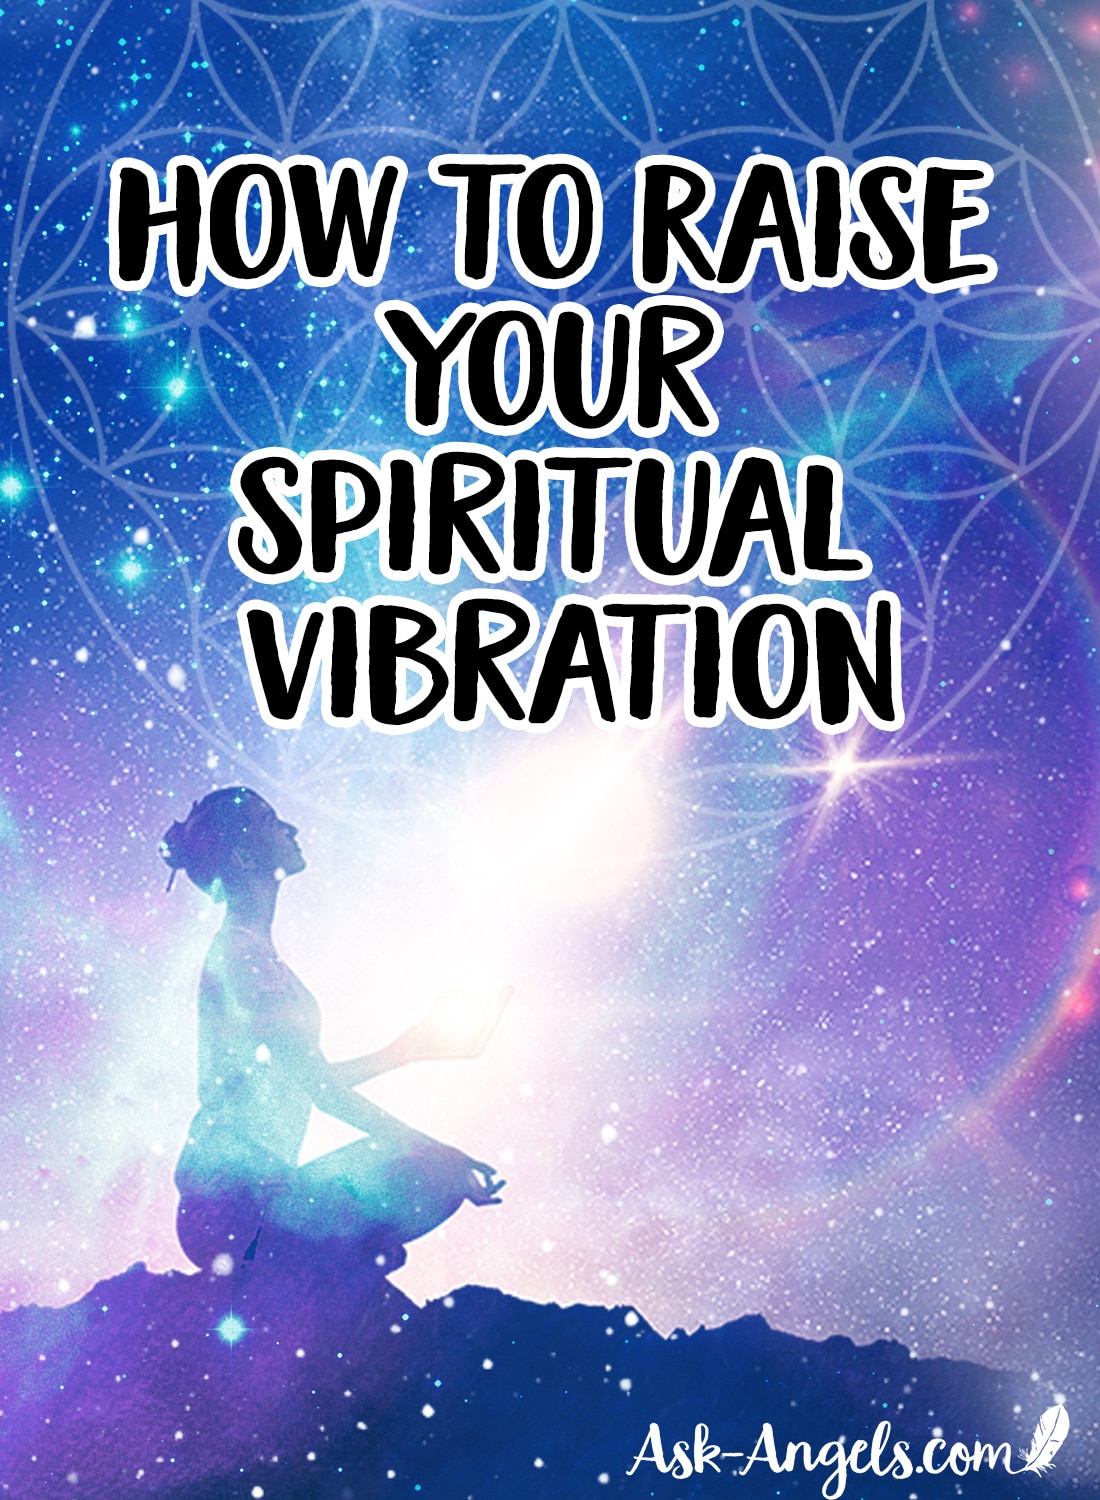 How to Raise Your Spiritual Vibration